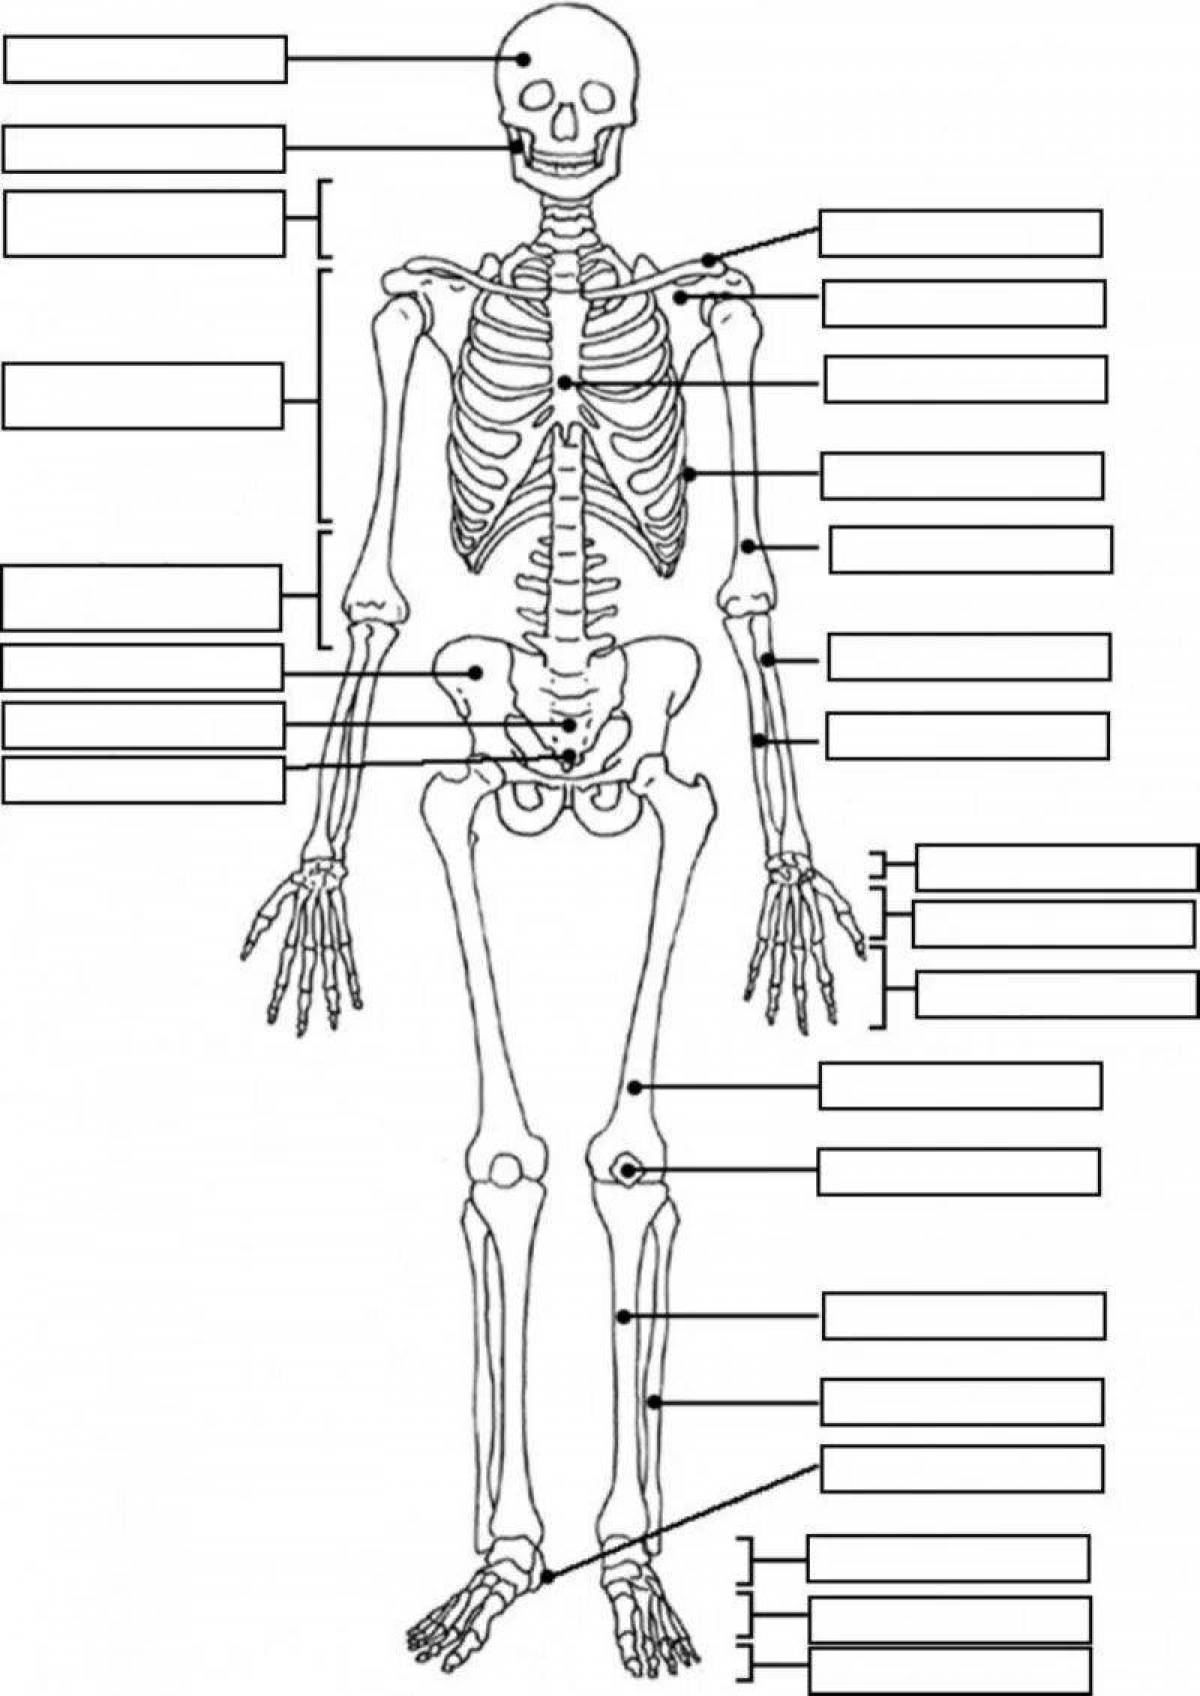 Human anatomy for kids #3